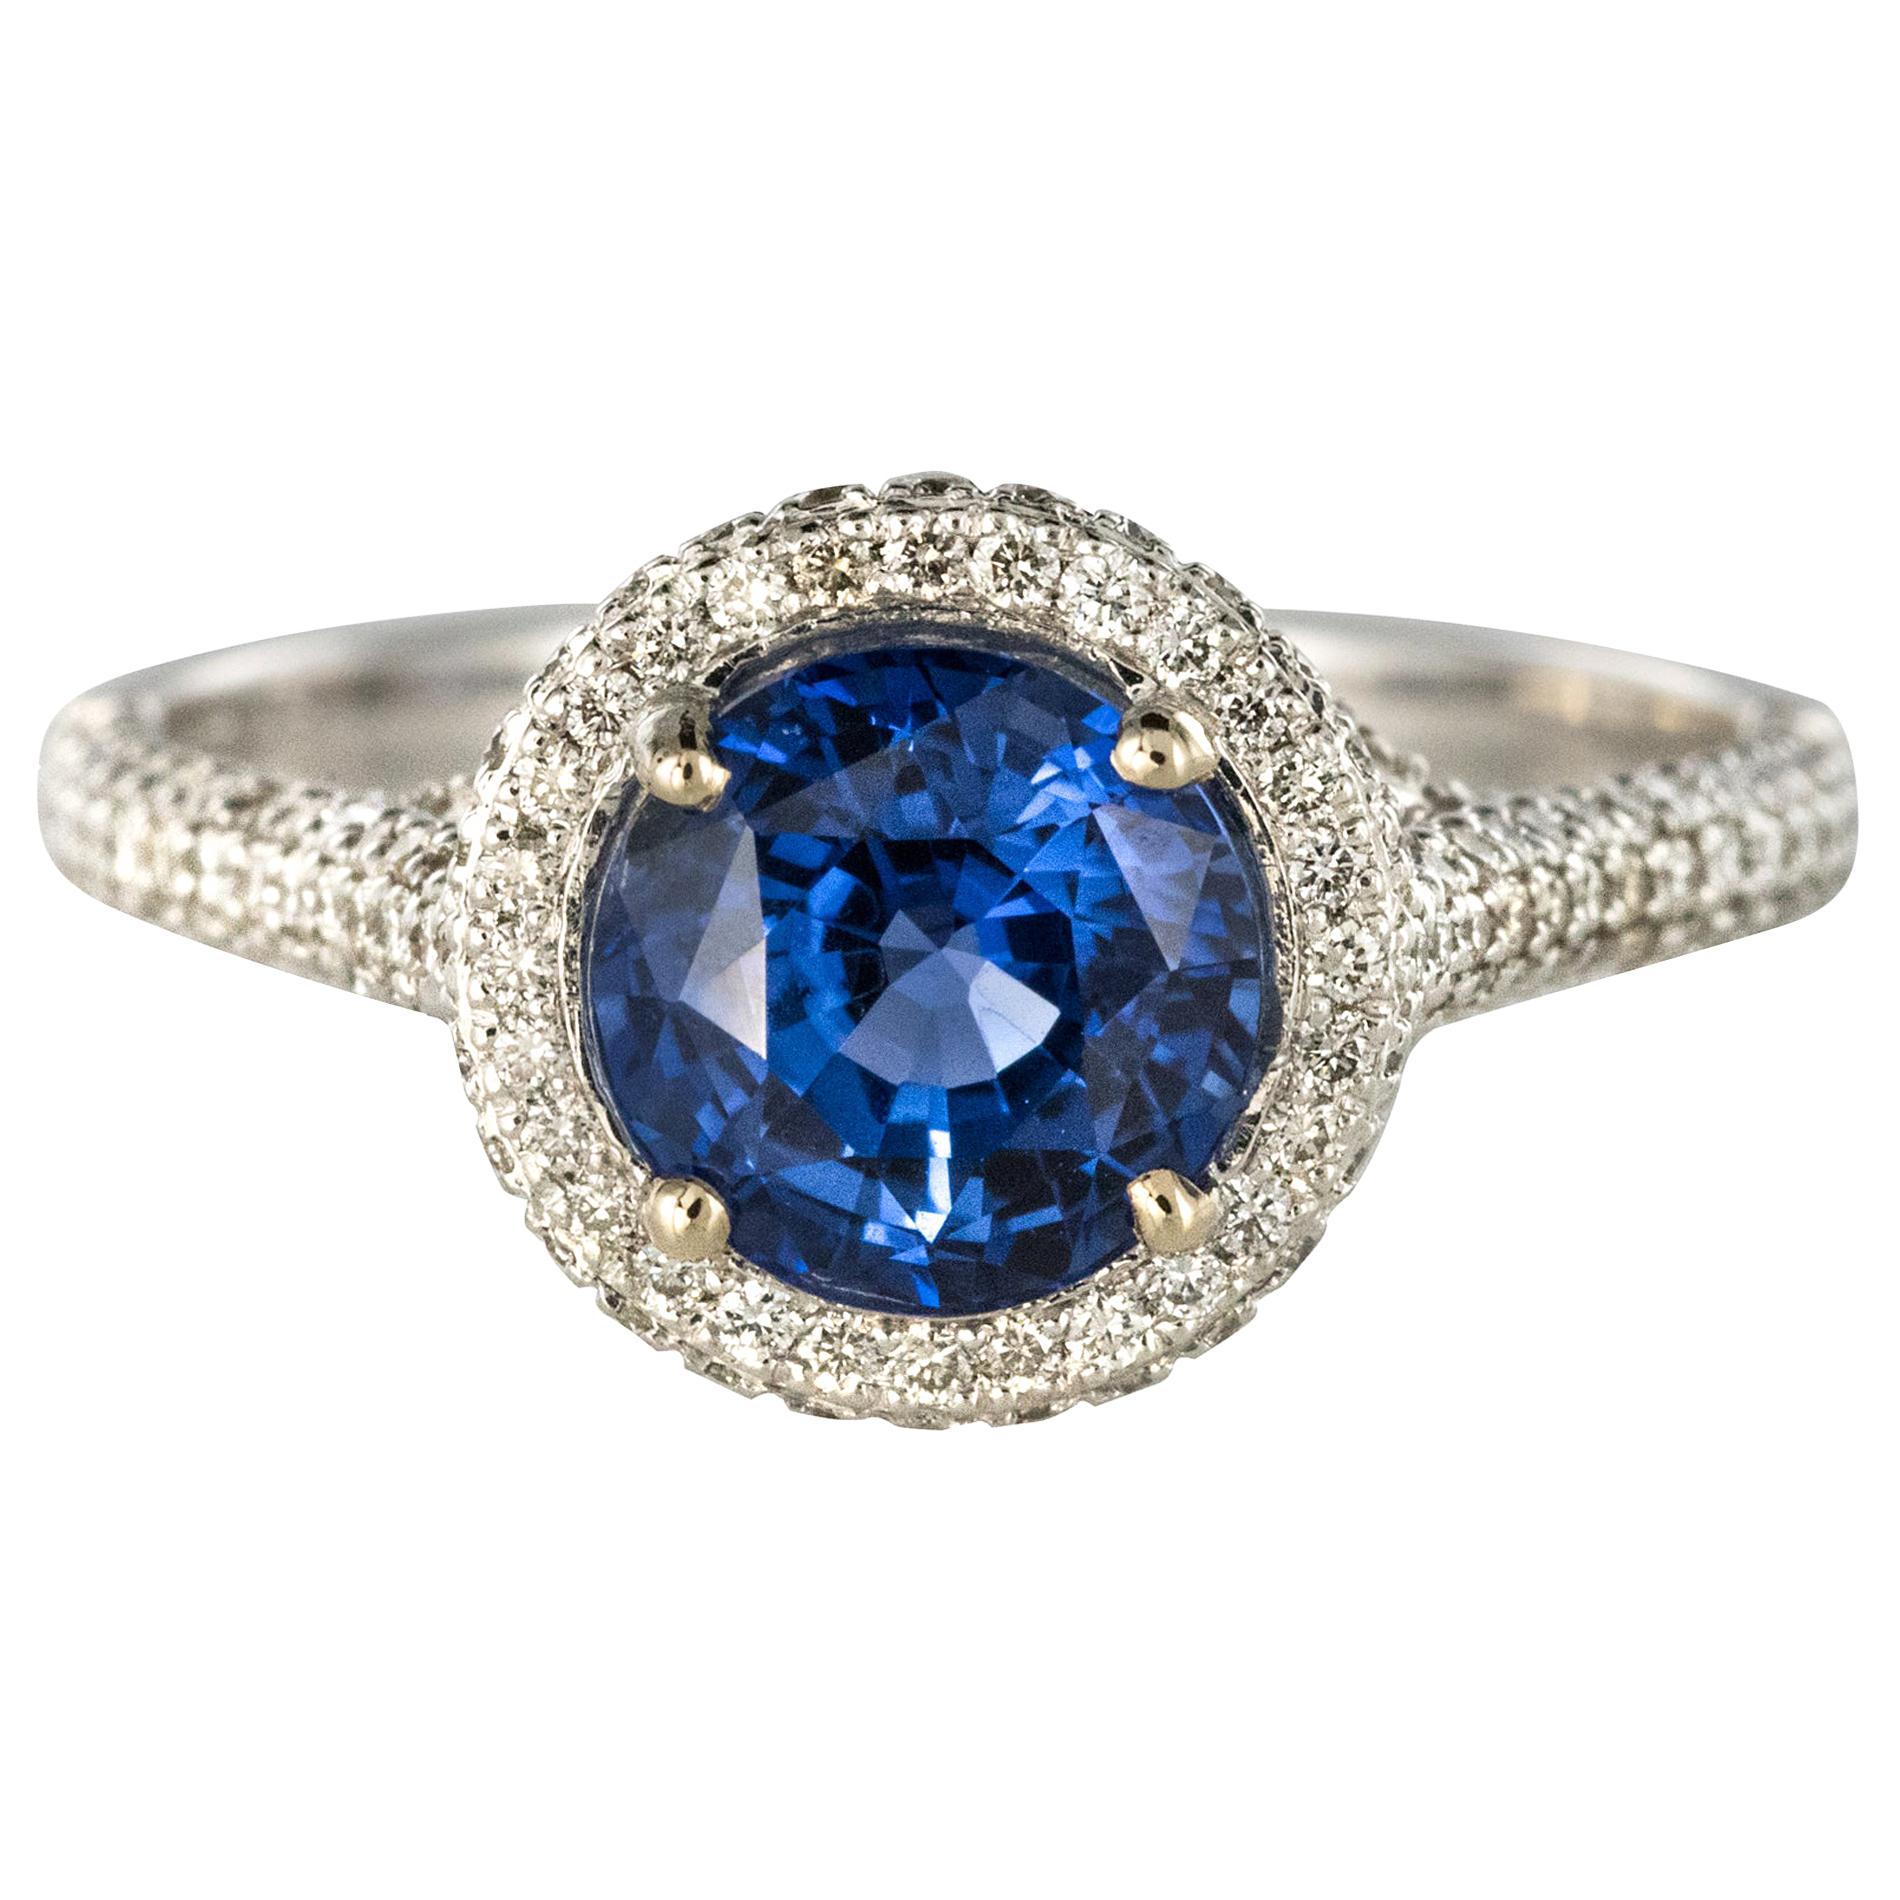 French 2.26 Carat Royal Blue Sri Lanka Certified Sapphire Diamonds Ring